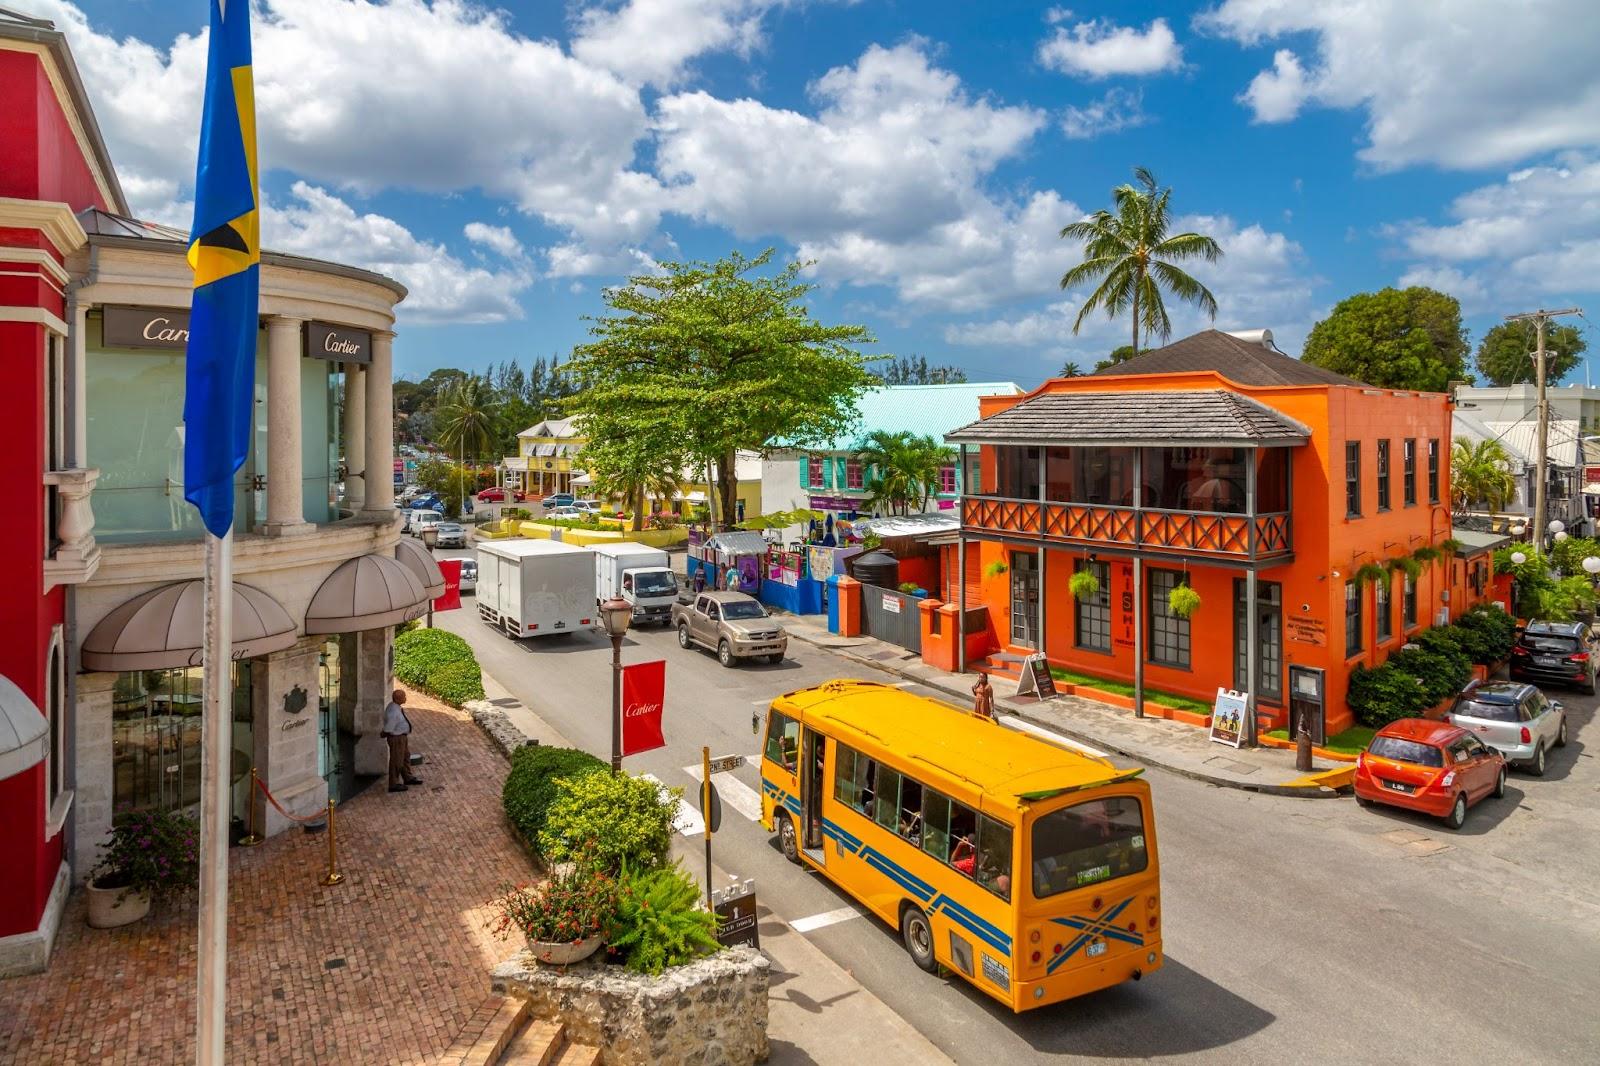 View of traditional 'Reggae Reggae' bus at Holetown, Barbados, 